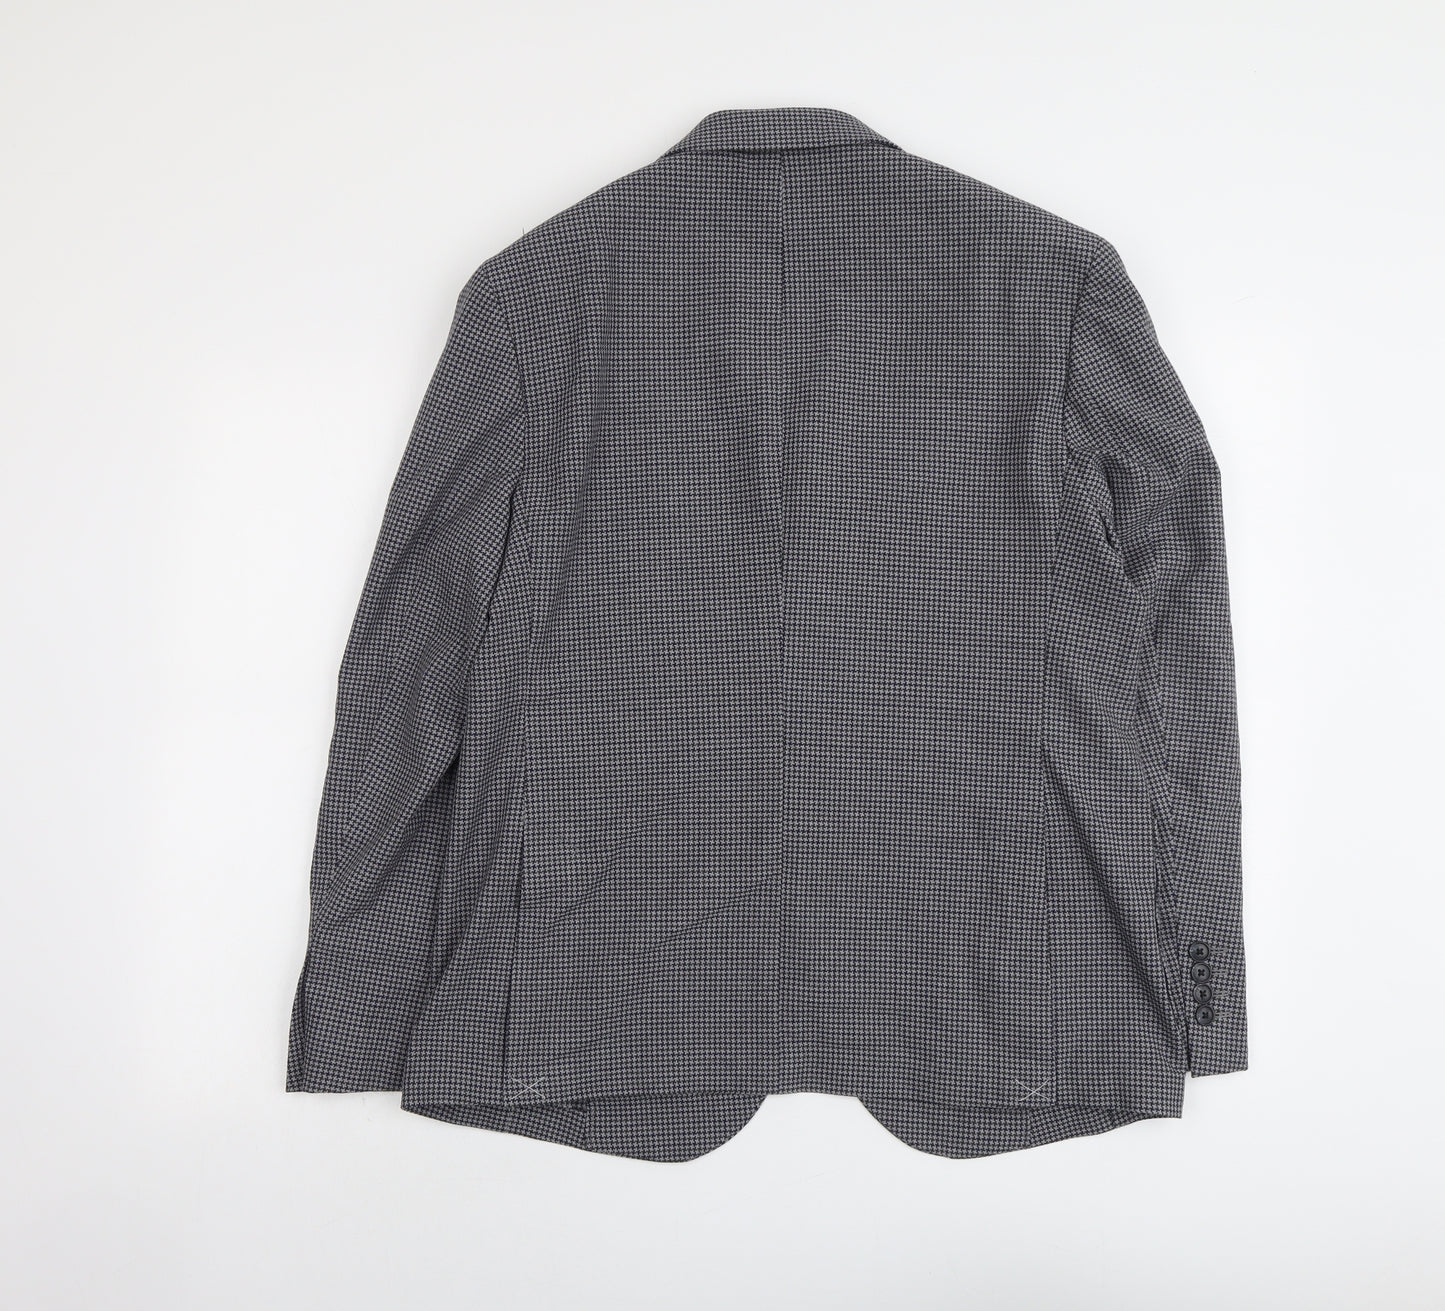 Marks and Spencer Mens Grey Geometric Polyester Jacket Suit Jacket Size 40 Regular